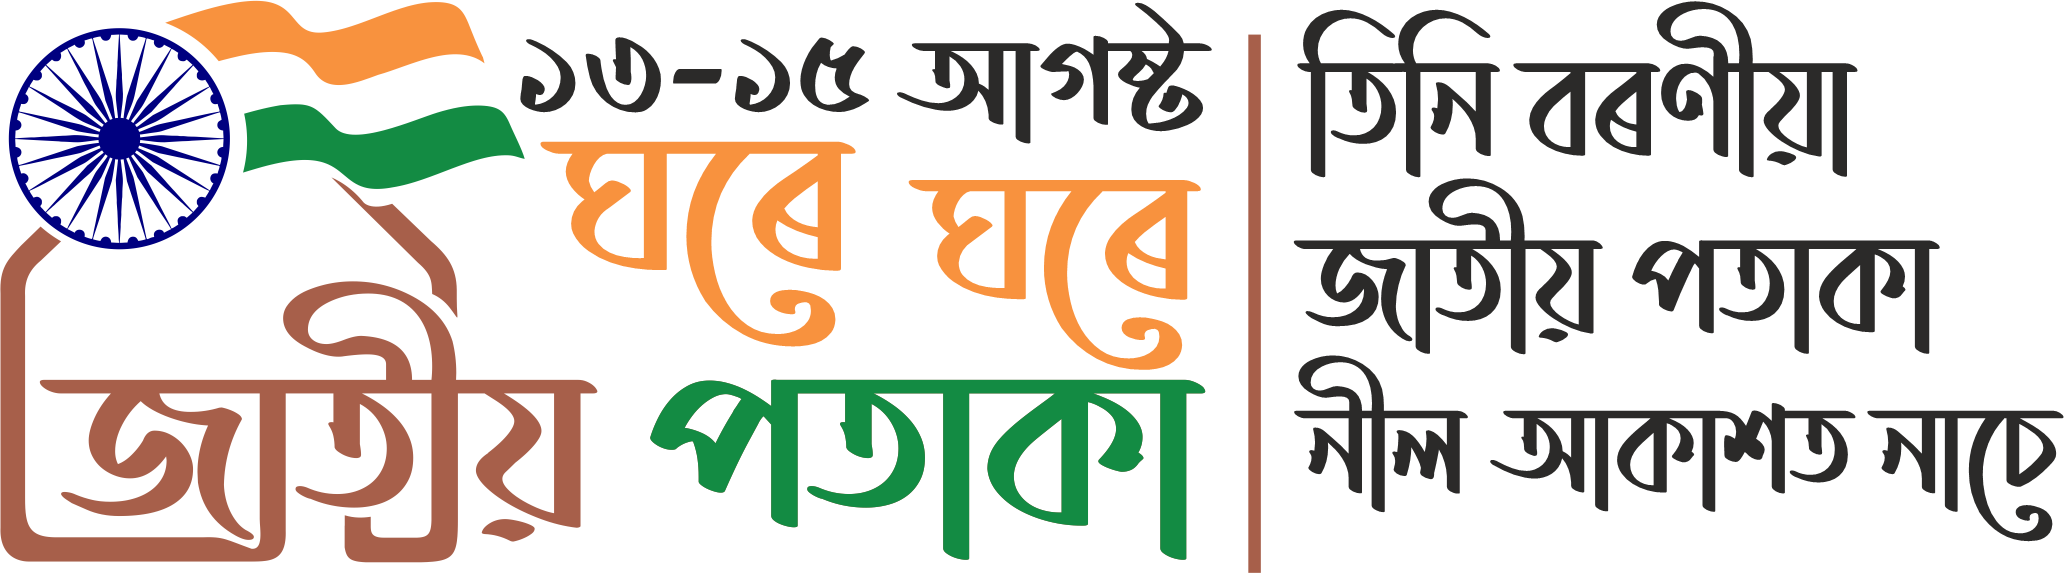 India flag logo Vectors & Illustrations for Free Download | Freepik